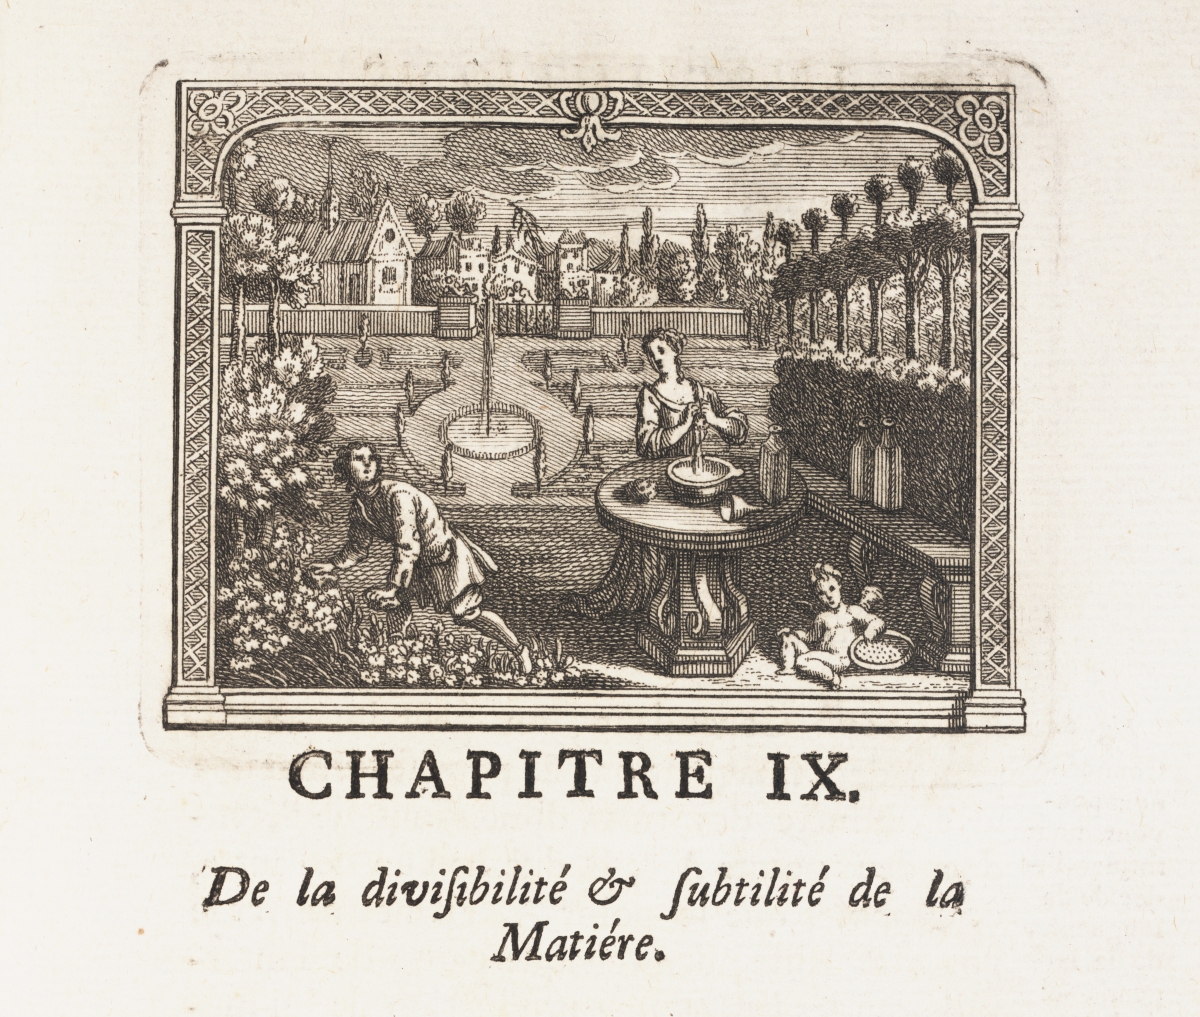 Image from du Chatelet's Institutions de Physique.